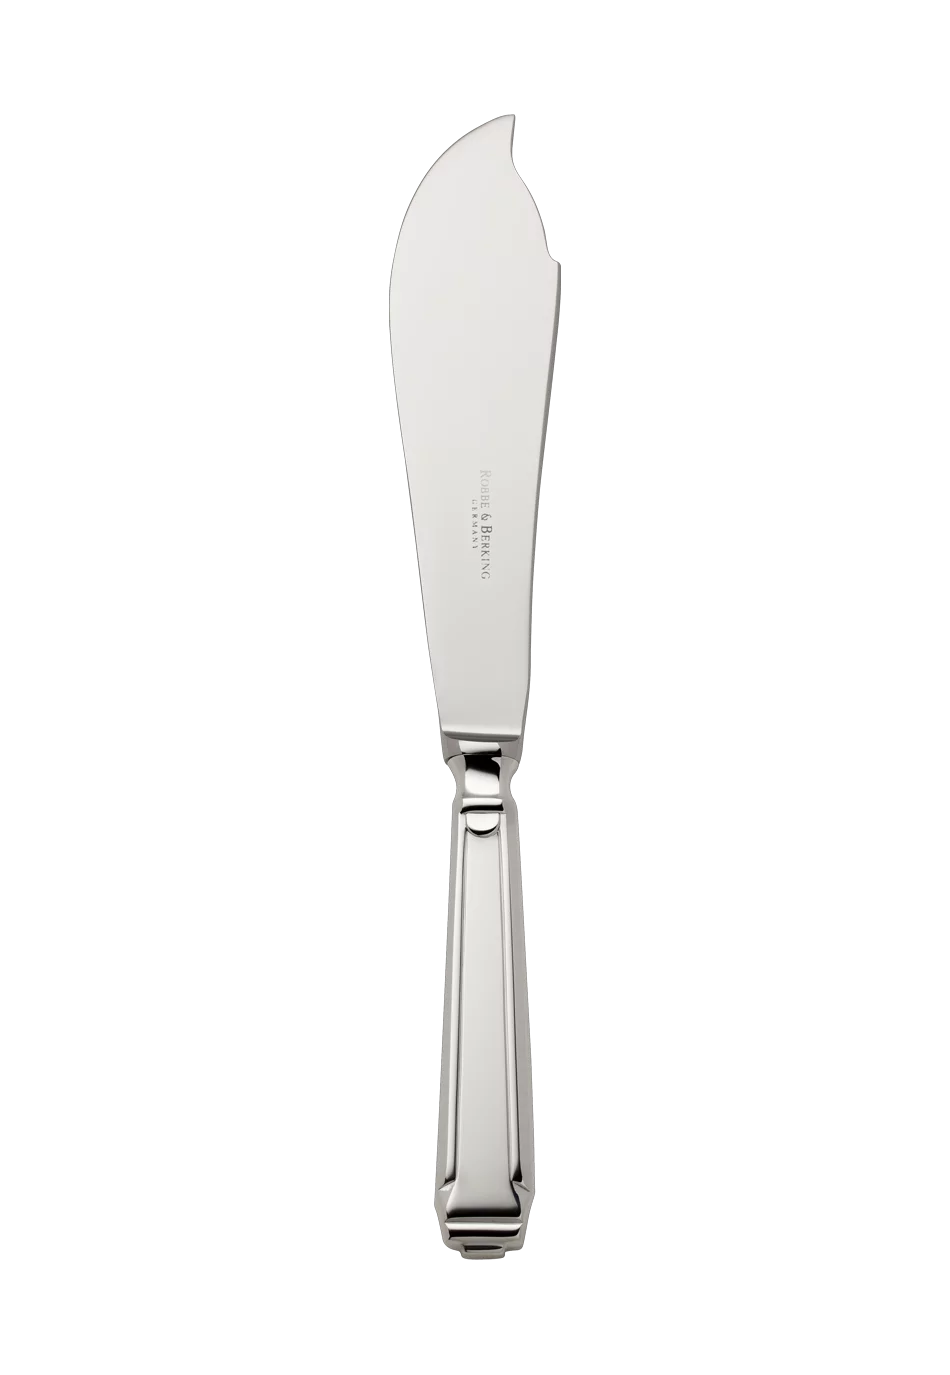 Art Deco Tart Knife (150g massive silverplated)